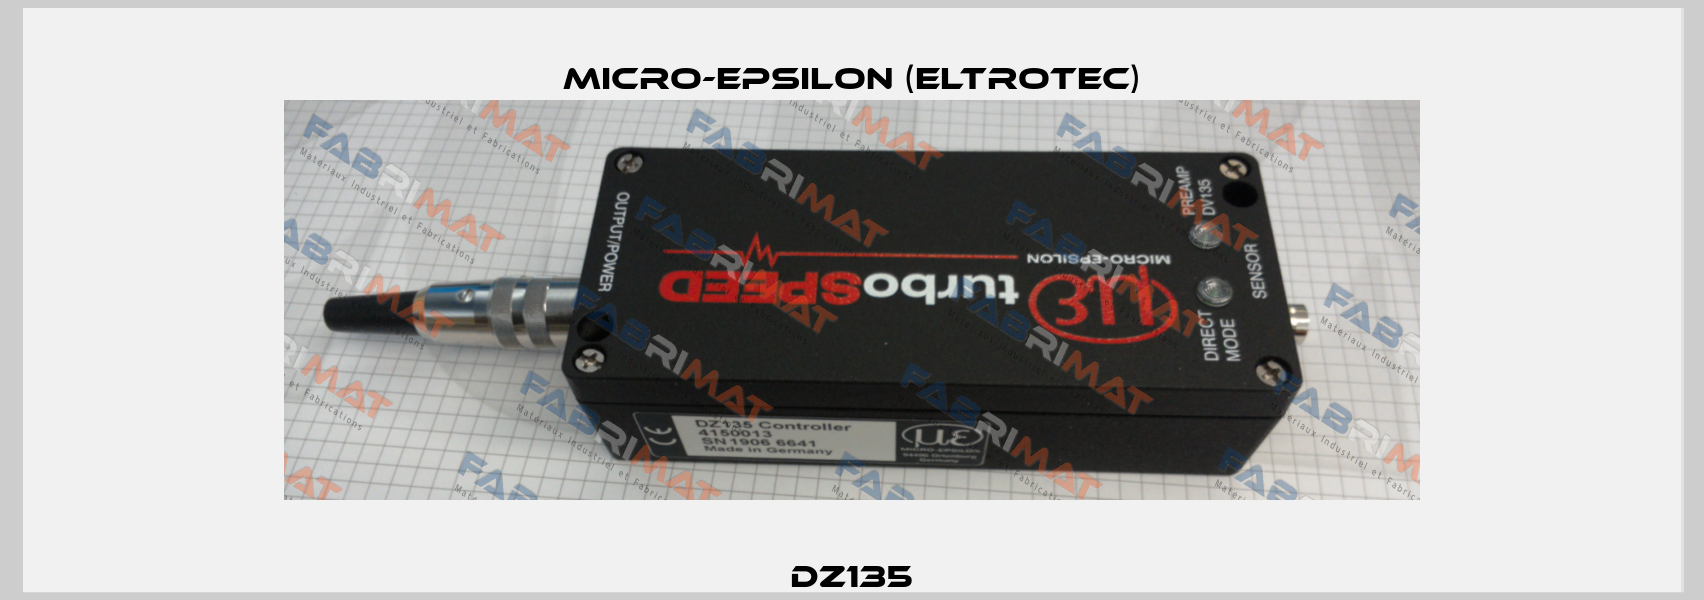 DZ135 Micro-Epsilon (Eltrotec)